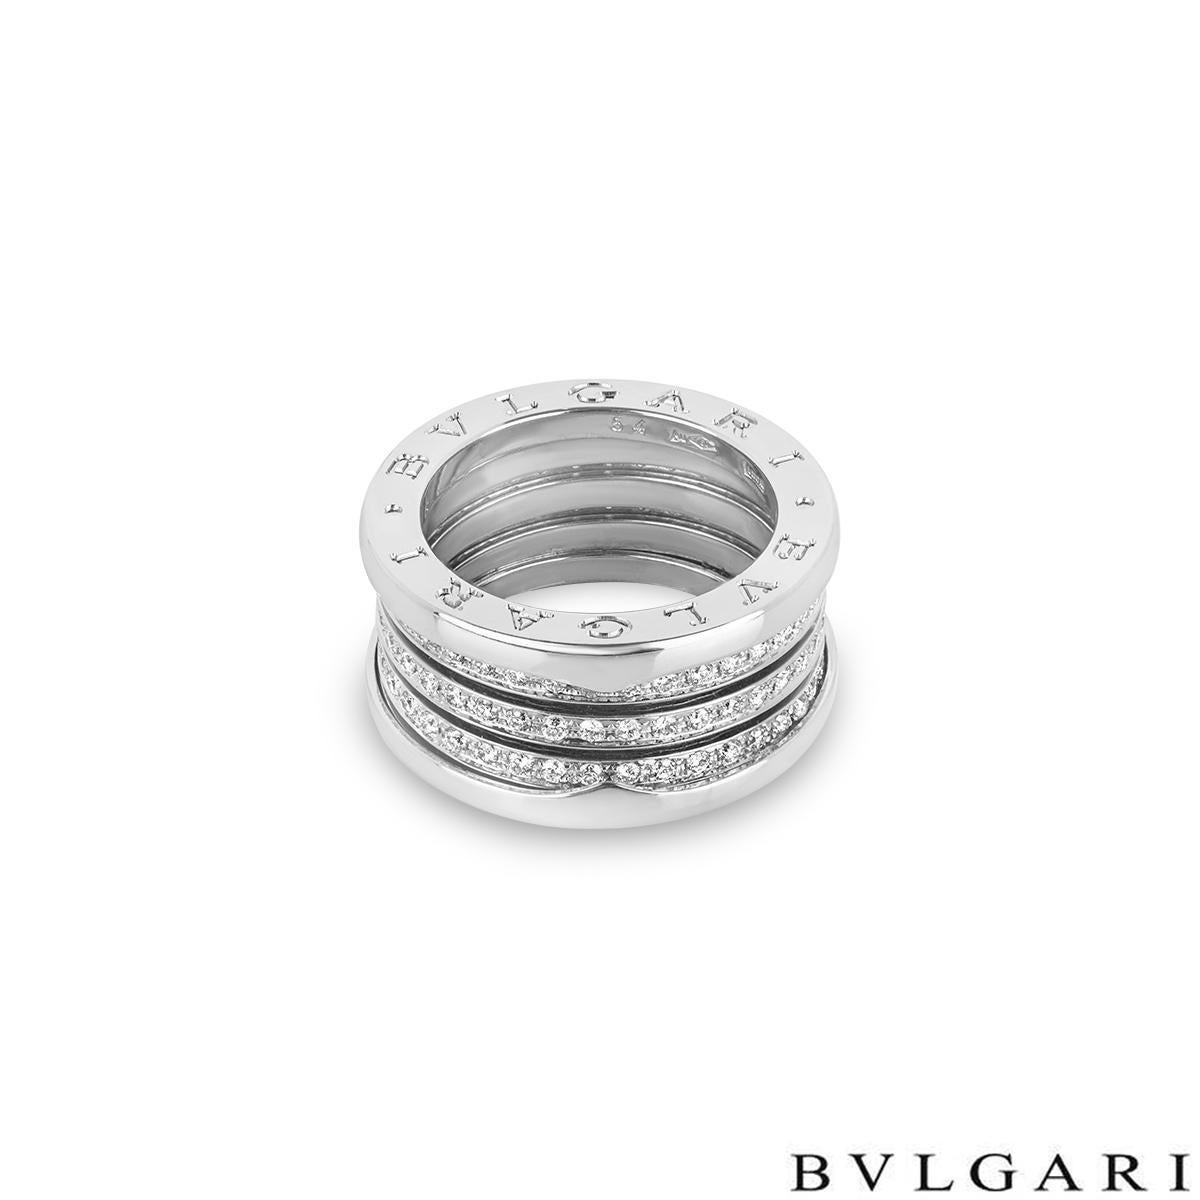 bvlgari silver ring with diamonds